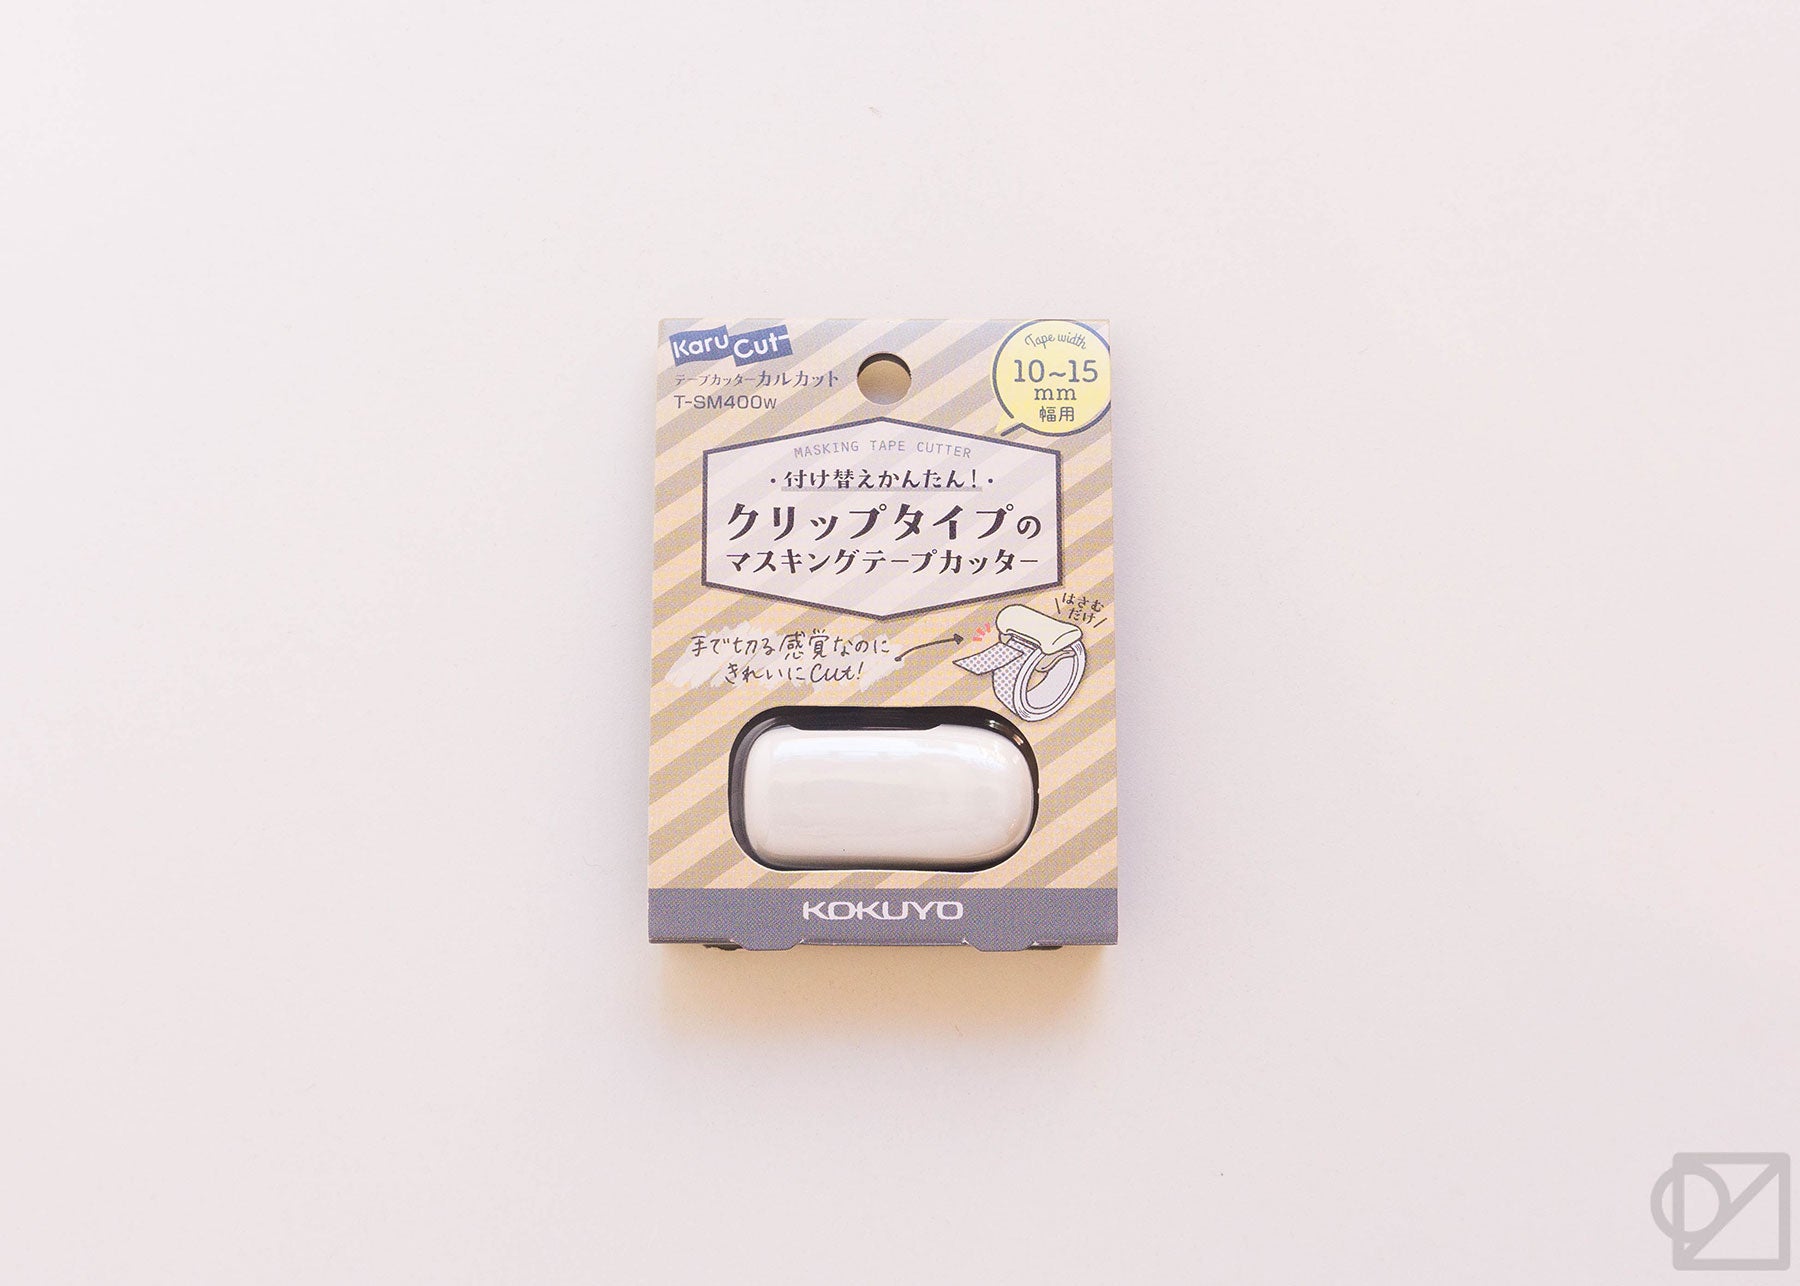 Kokuyo Me Clip-type Tape Cutter (10-15mm) Grayish Black